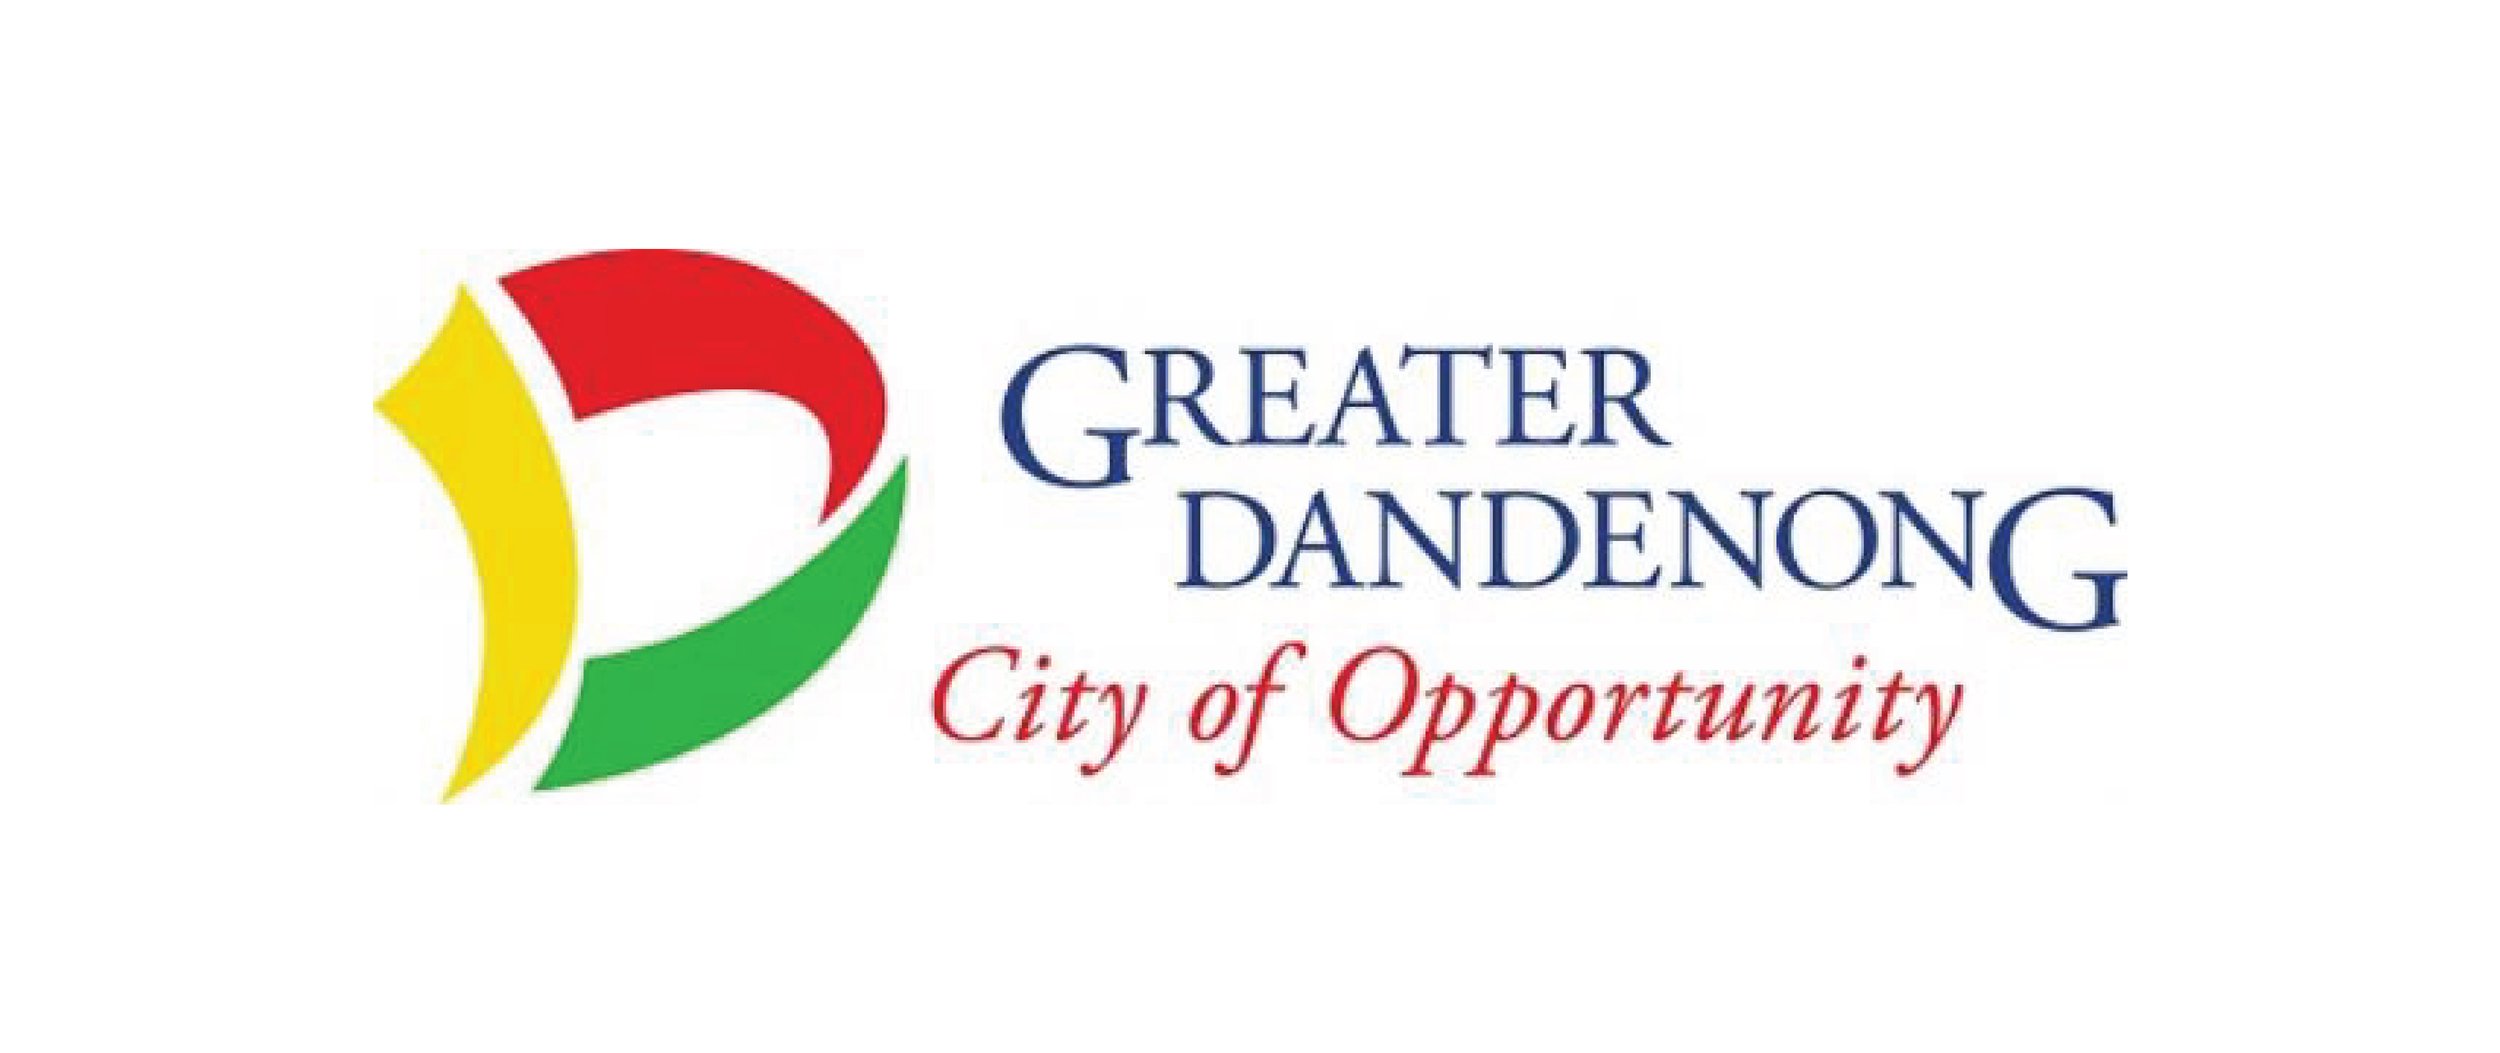 Greater-dandenong-council-logo-rgb.jpg